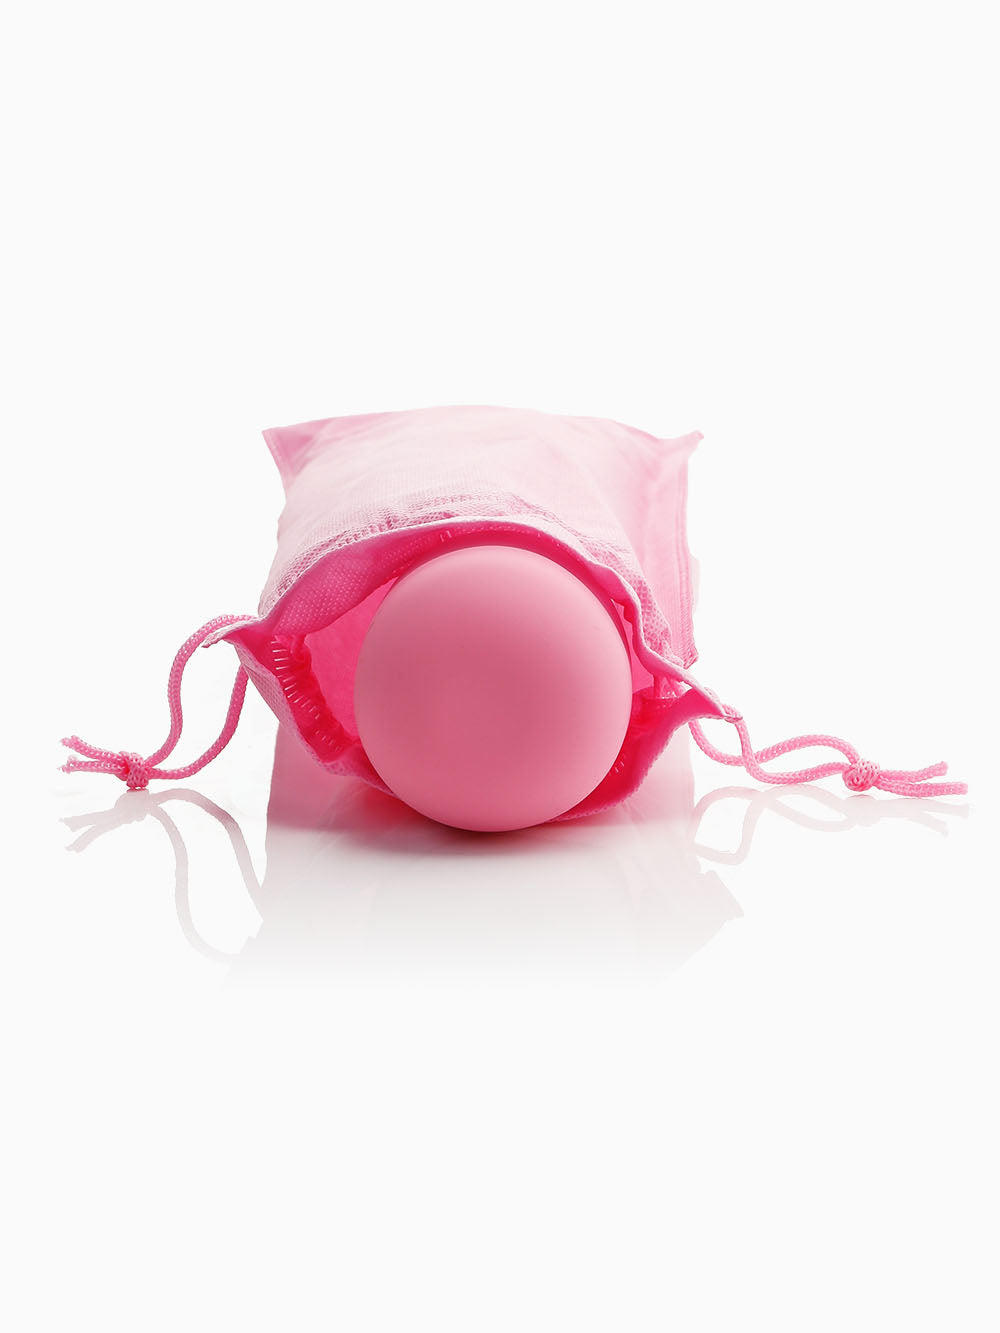 Pillow Talk Massage Wand Vibrator - Pink, 12.5 Inches